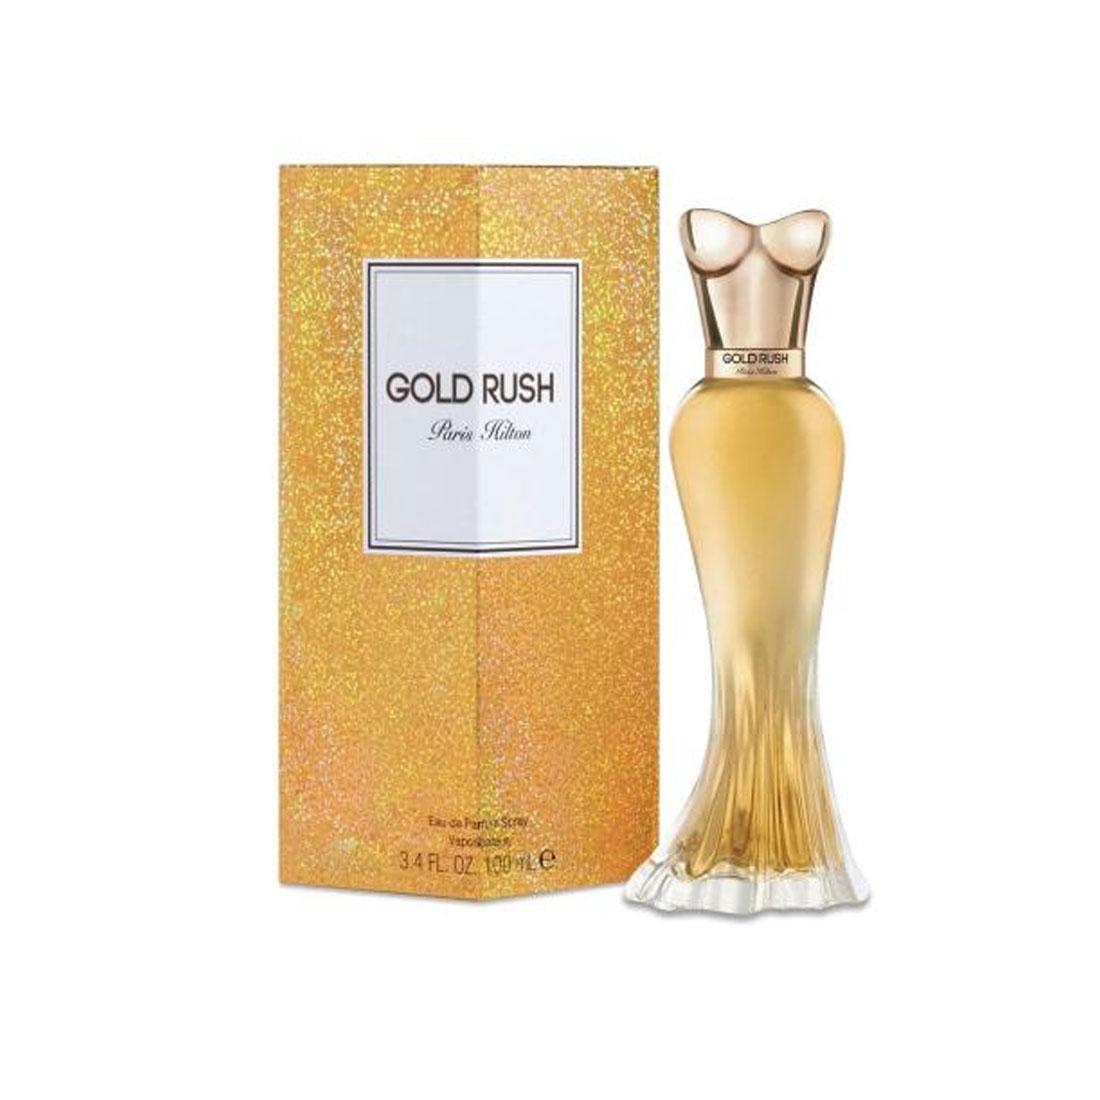 Perfume Mujer Gold Rush Eau de Parfum 100 ml Paris Hilton